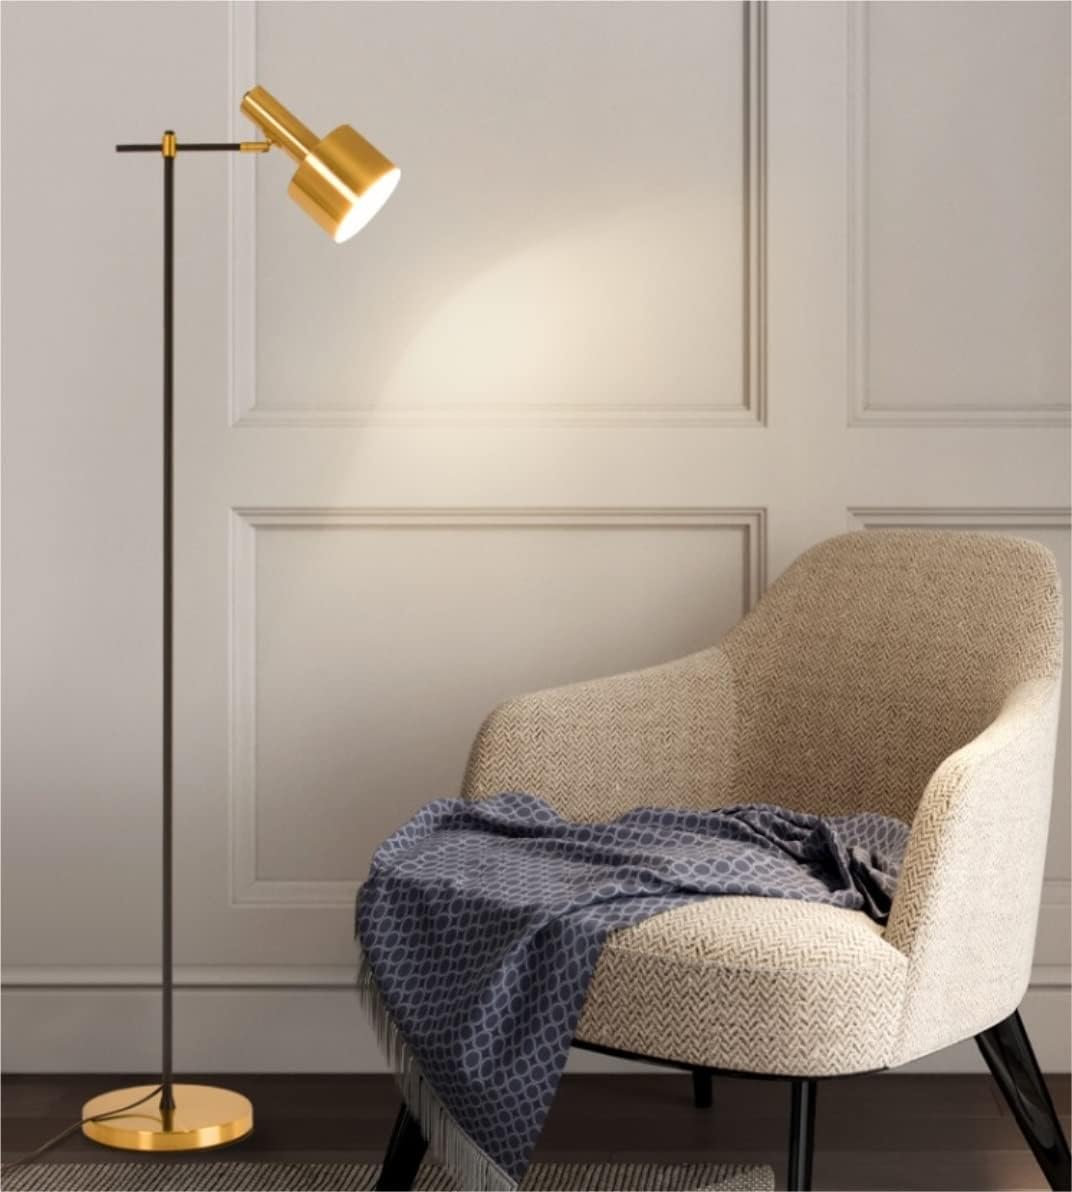 Hdc Floor lamp living room luxury Nordic ins fishing lamp bedroom simple  modern sofa study at Rs 8499.00, delhi, New Delhi